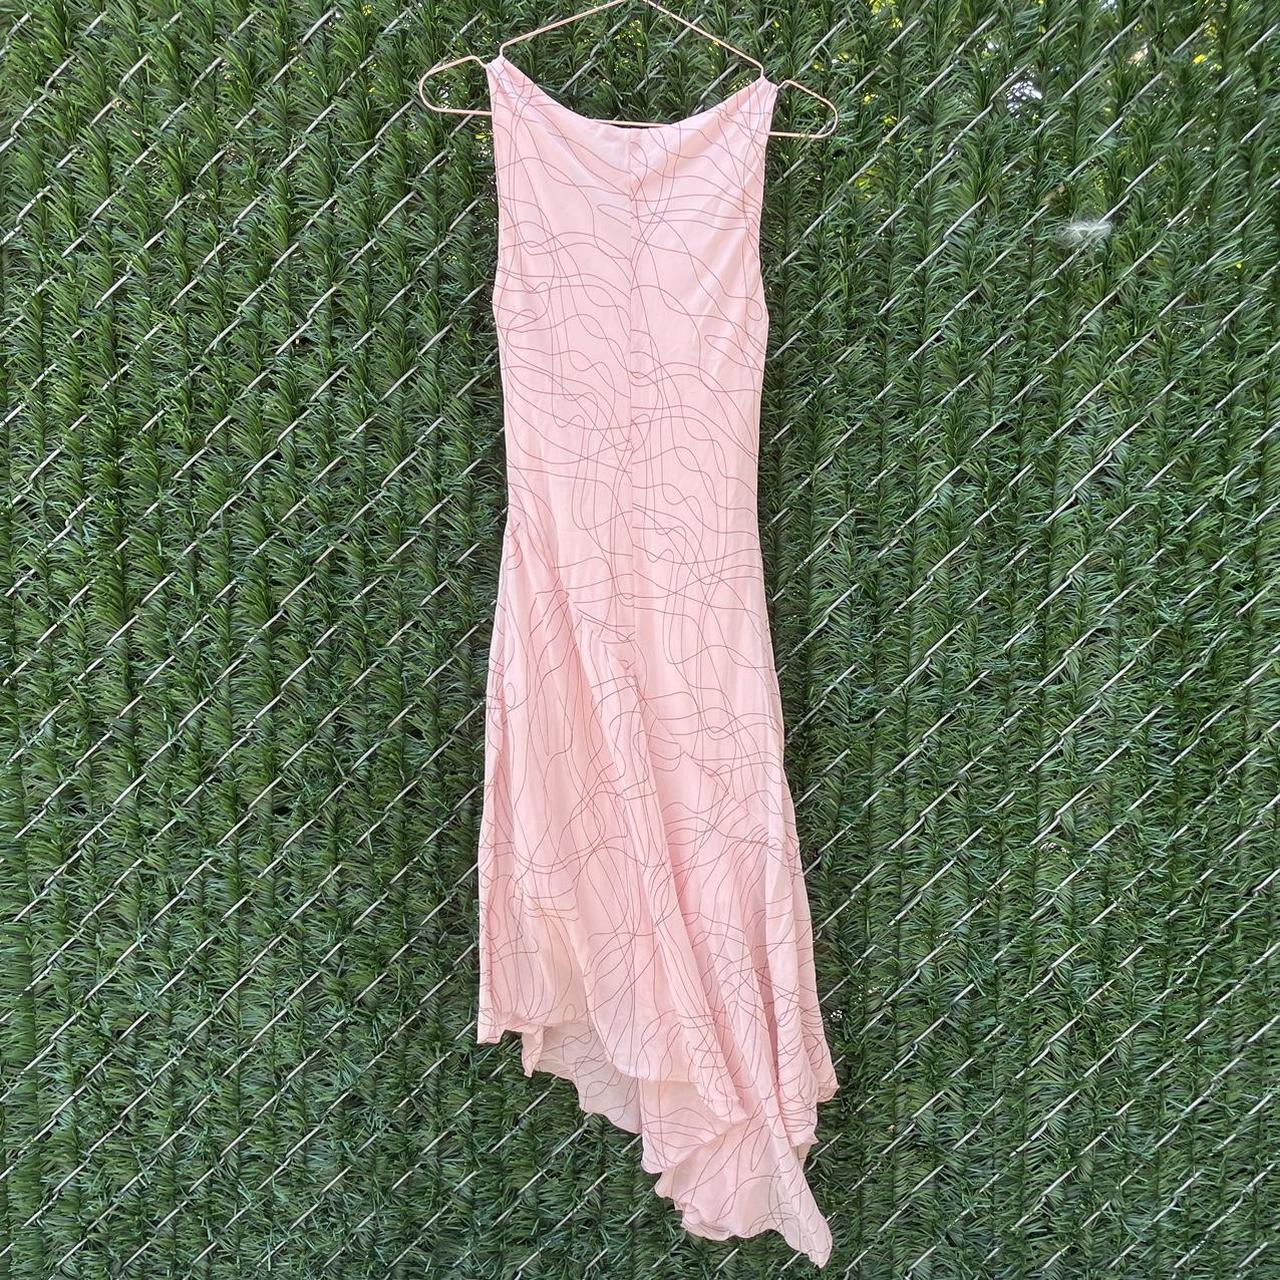 Khaki Krew Women's Pink and Brown Dress (7)